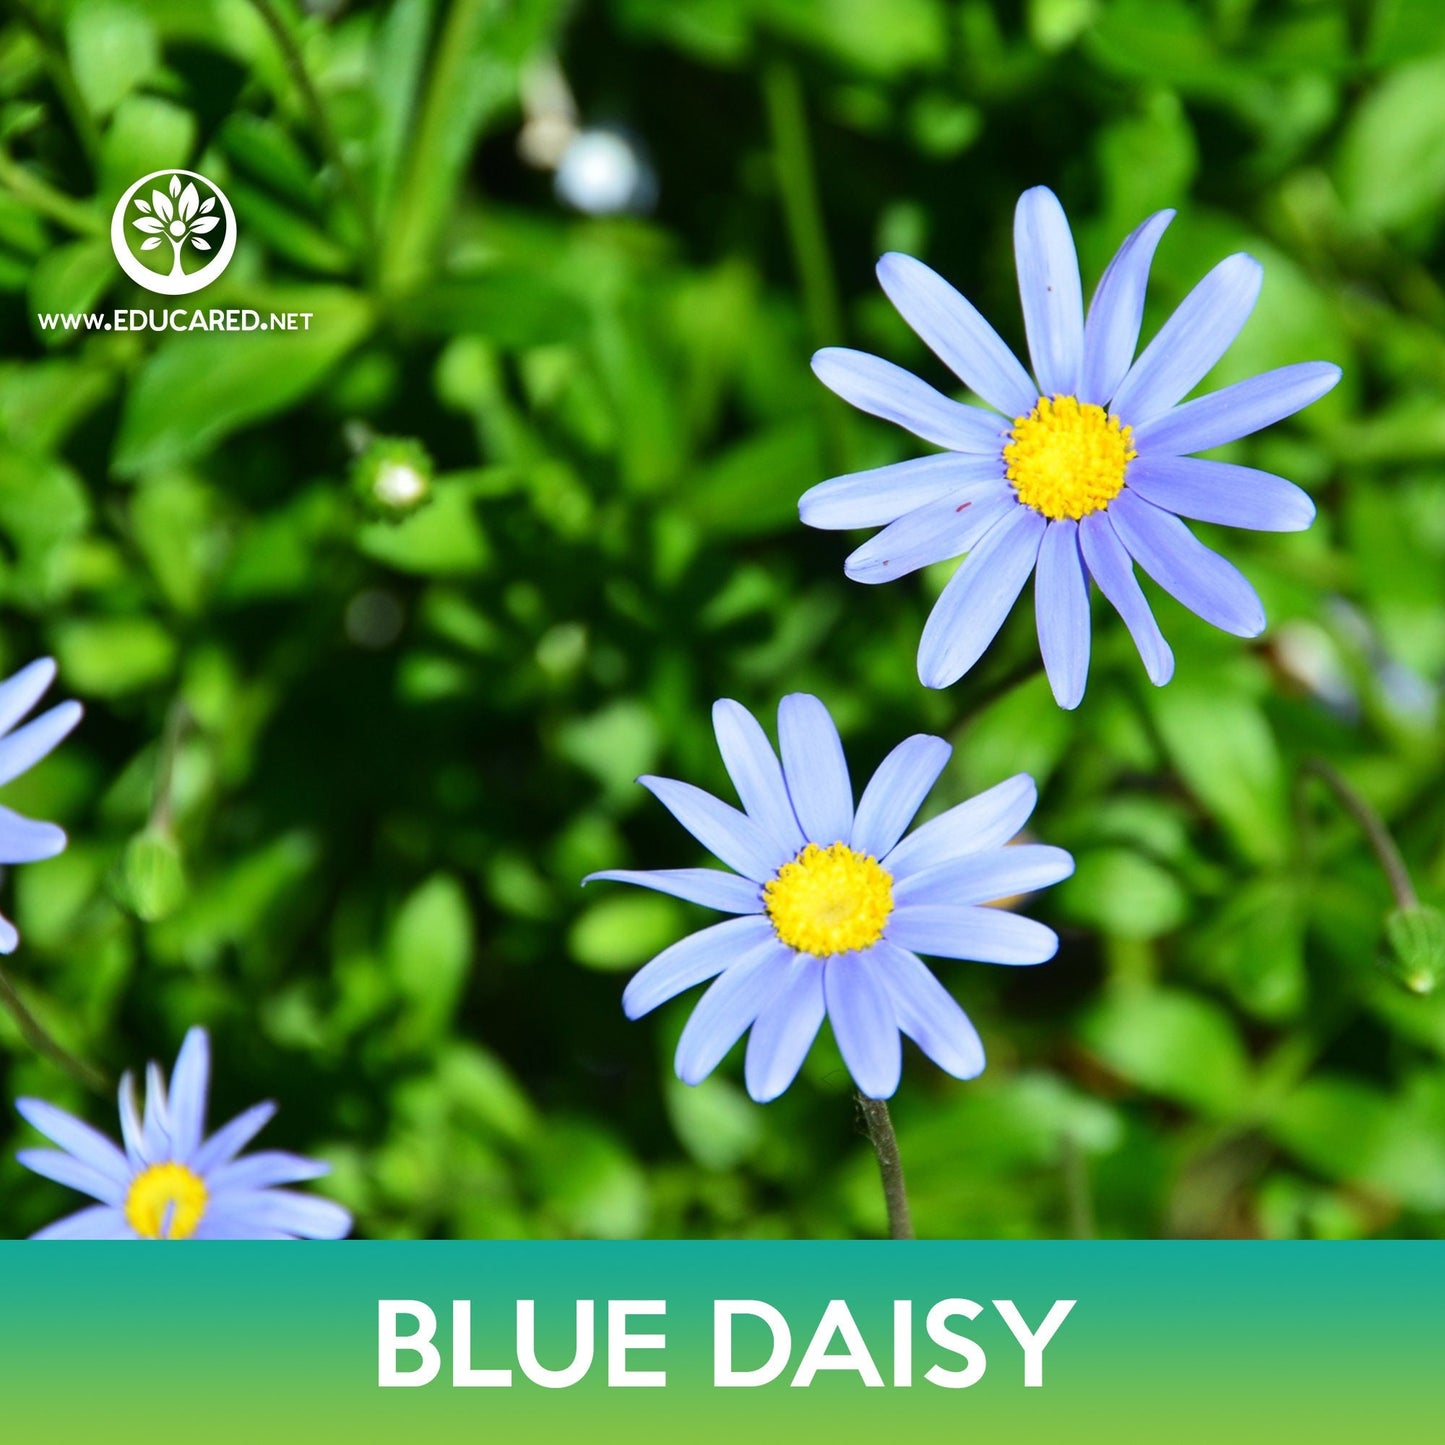 Blue Daisy Seeds, Felicia heterophylla